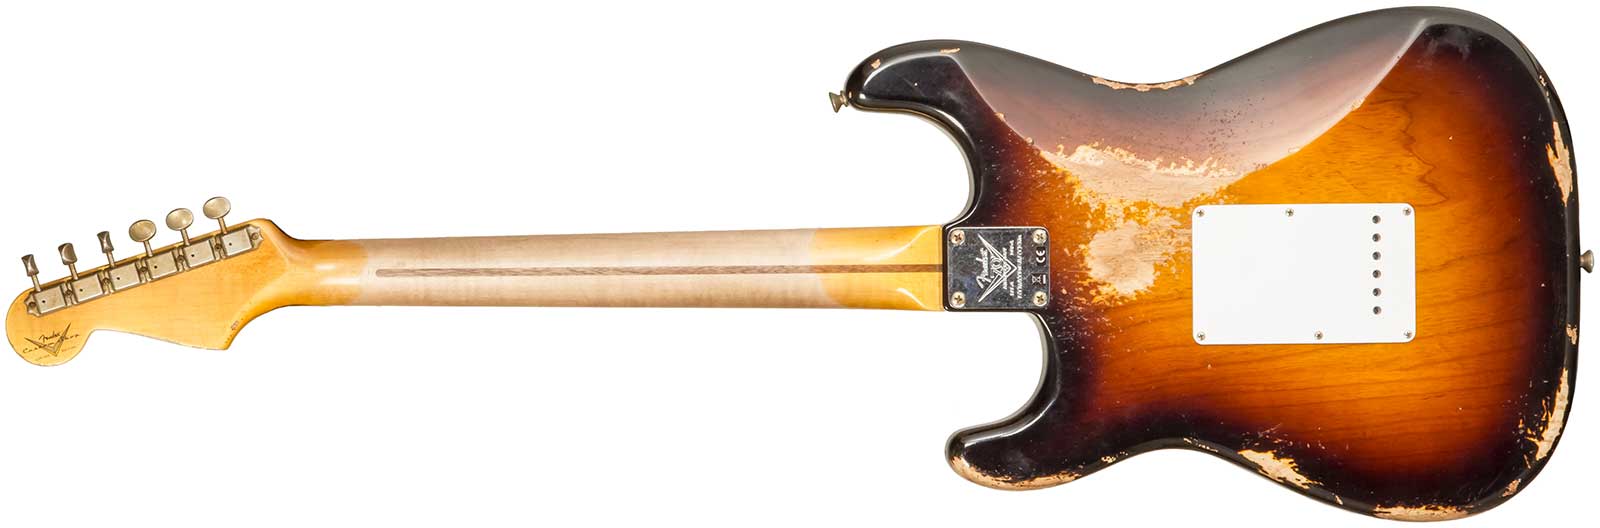 Fender Custom Shop Strat 1954 70th Anniv. 3s Trem Mn #xn4308 - Heavy Relic Wide Fade 2-color Sunburst - Guitare Électrique Forme Str - Variation 1